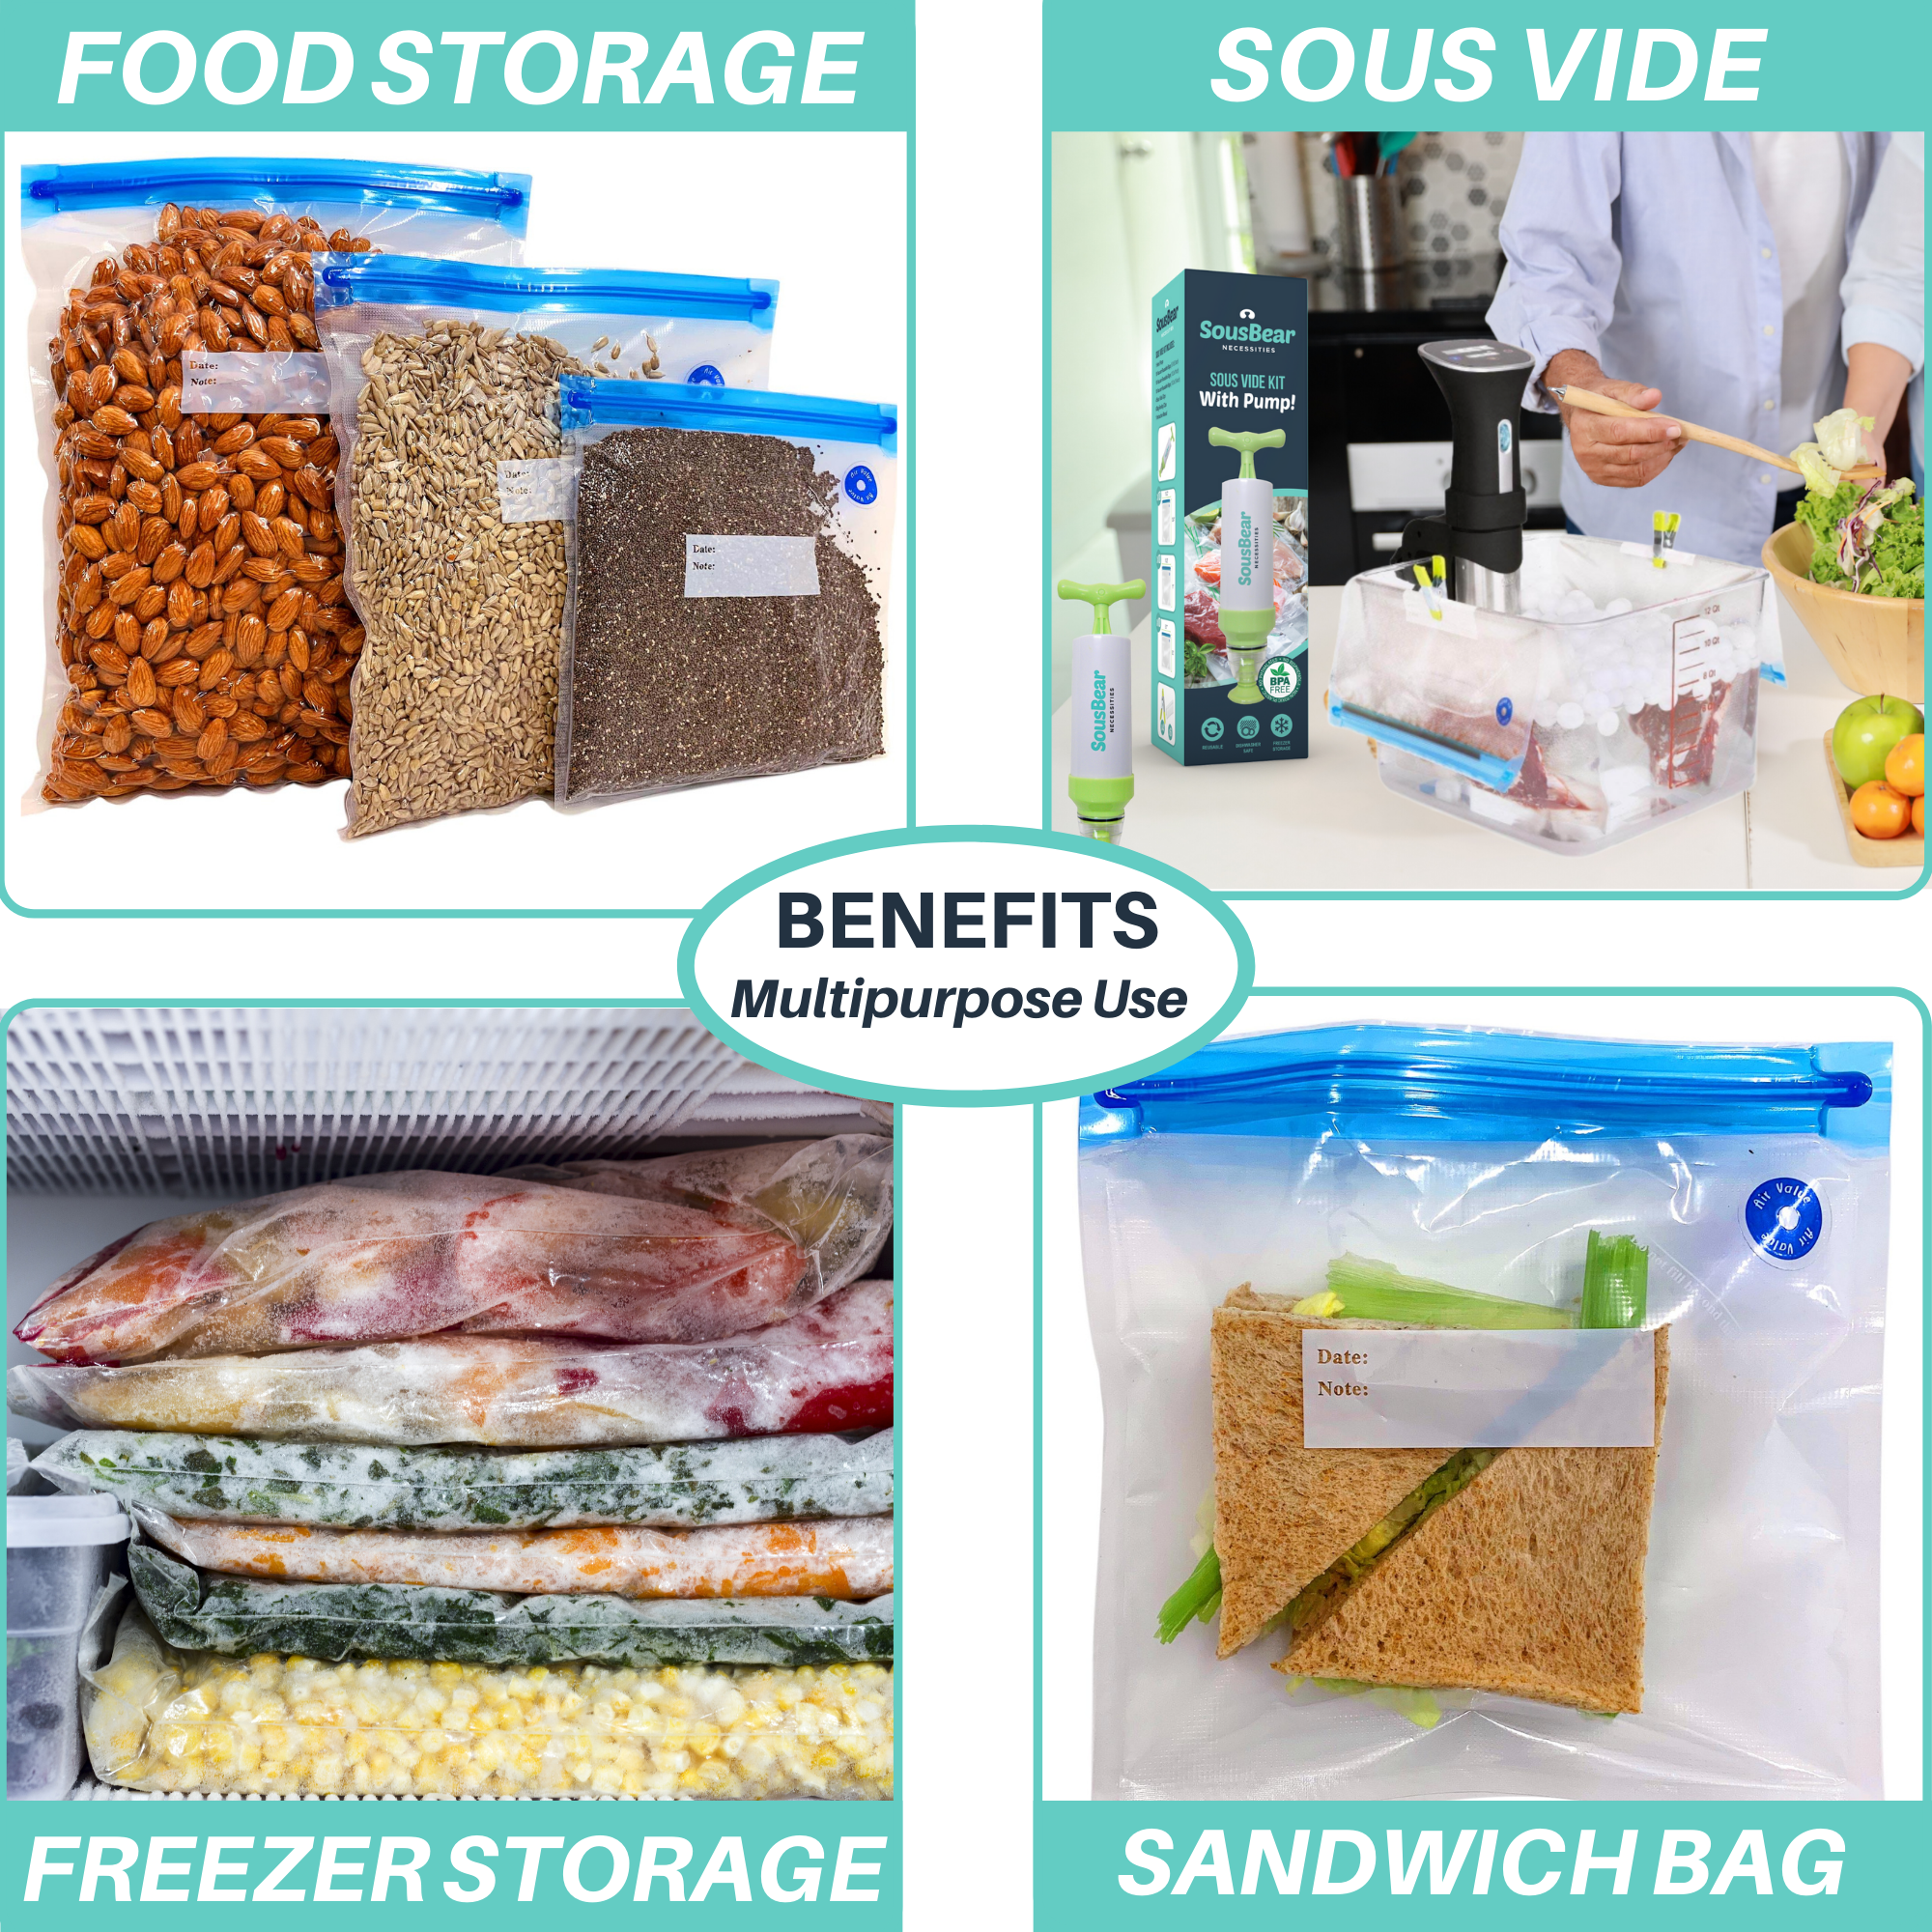 Best Reusable Food Storage Bag - Sous Vide Guy